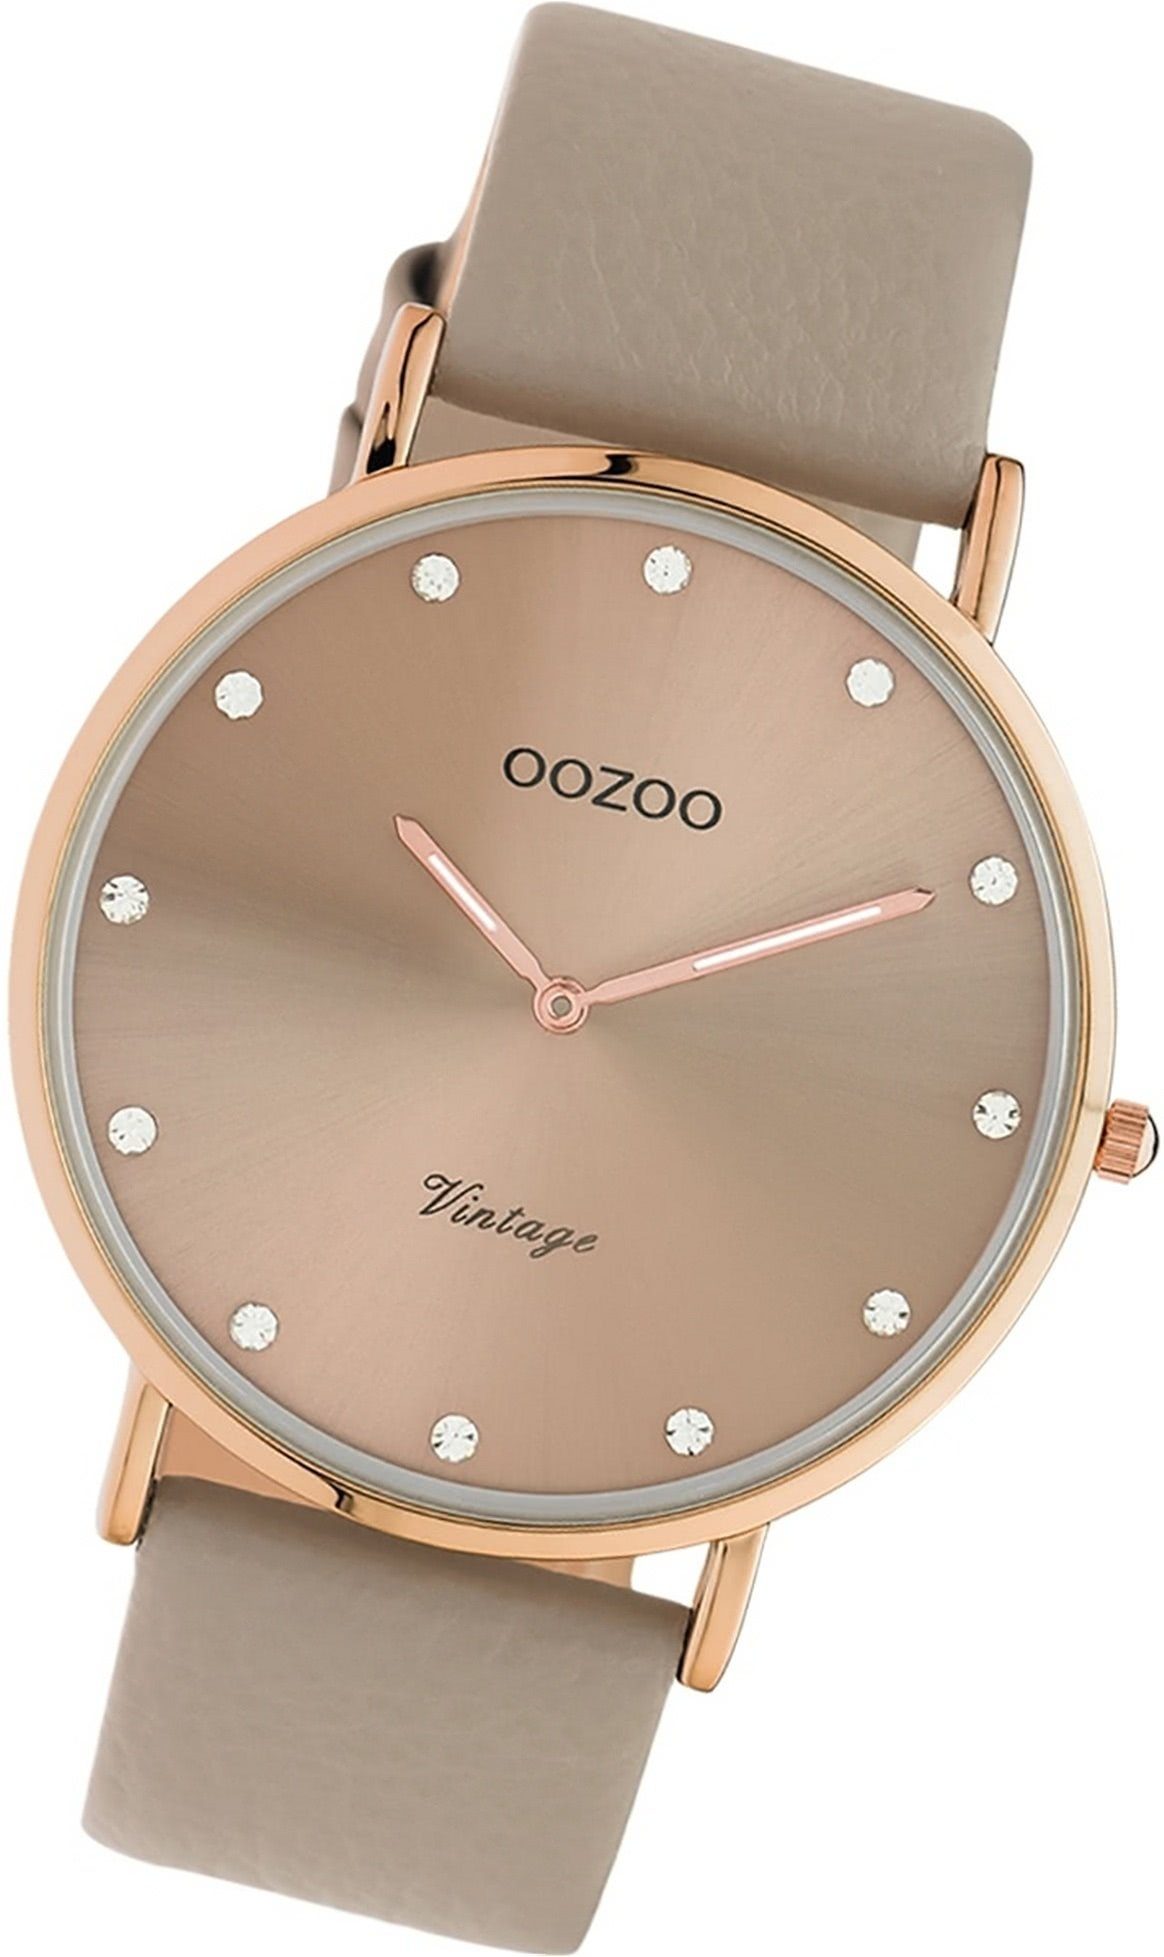 Oozoo rundes Damen, (ca. 40mm) OOZOO Lederarmband Uhr Leder Analog, Unisex Quarzuhr C20246 braun, taupe, Gehäuse, Herrenuhr